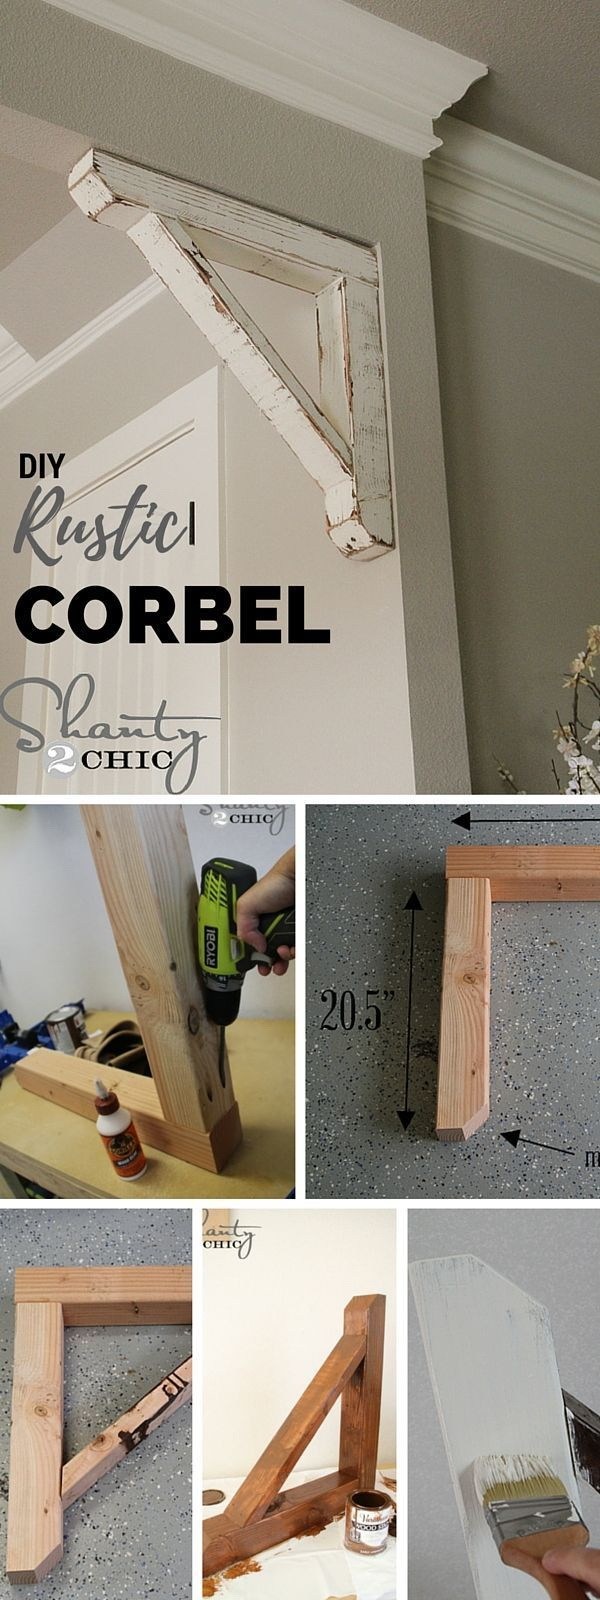 DIY Rustic Wood Corbel. A corbel is a decorative bracket that is suspended below a shelf, beam or ceiling. 